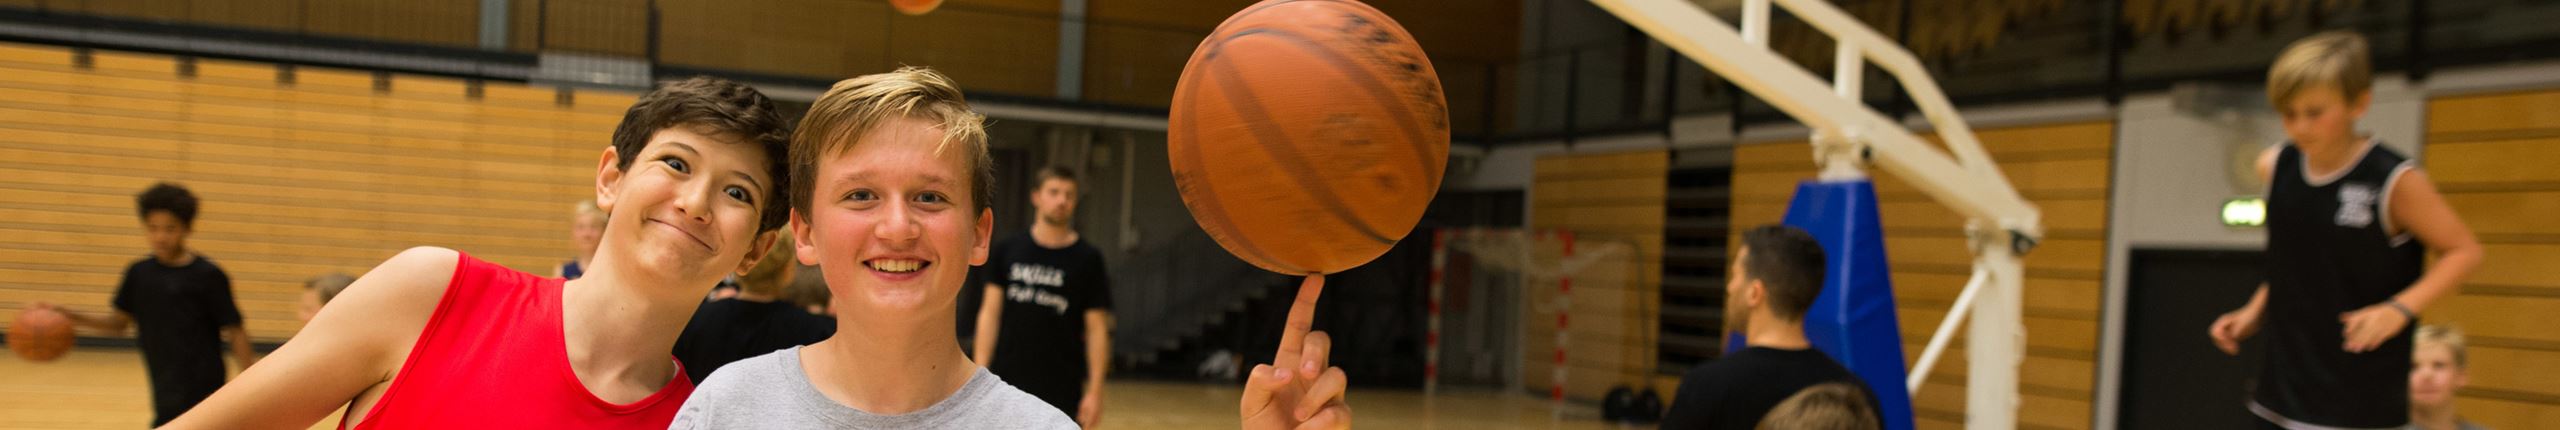 sfo-basketball.jpg